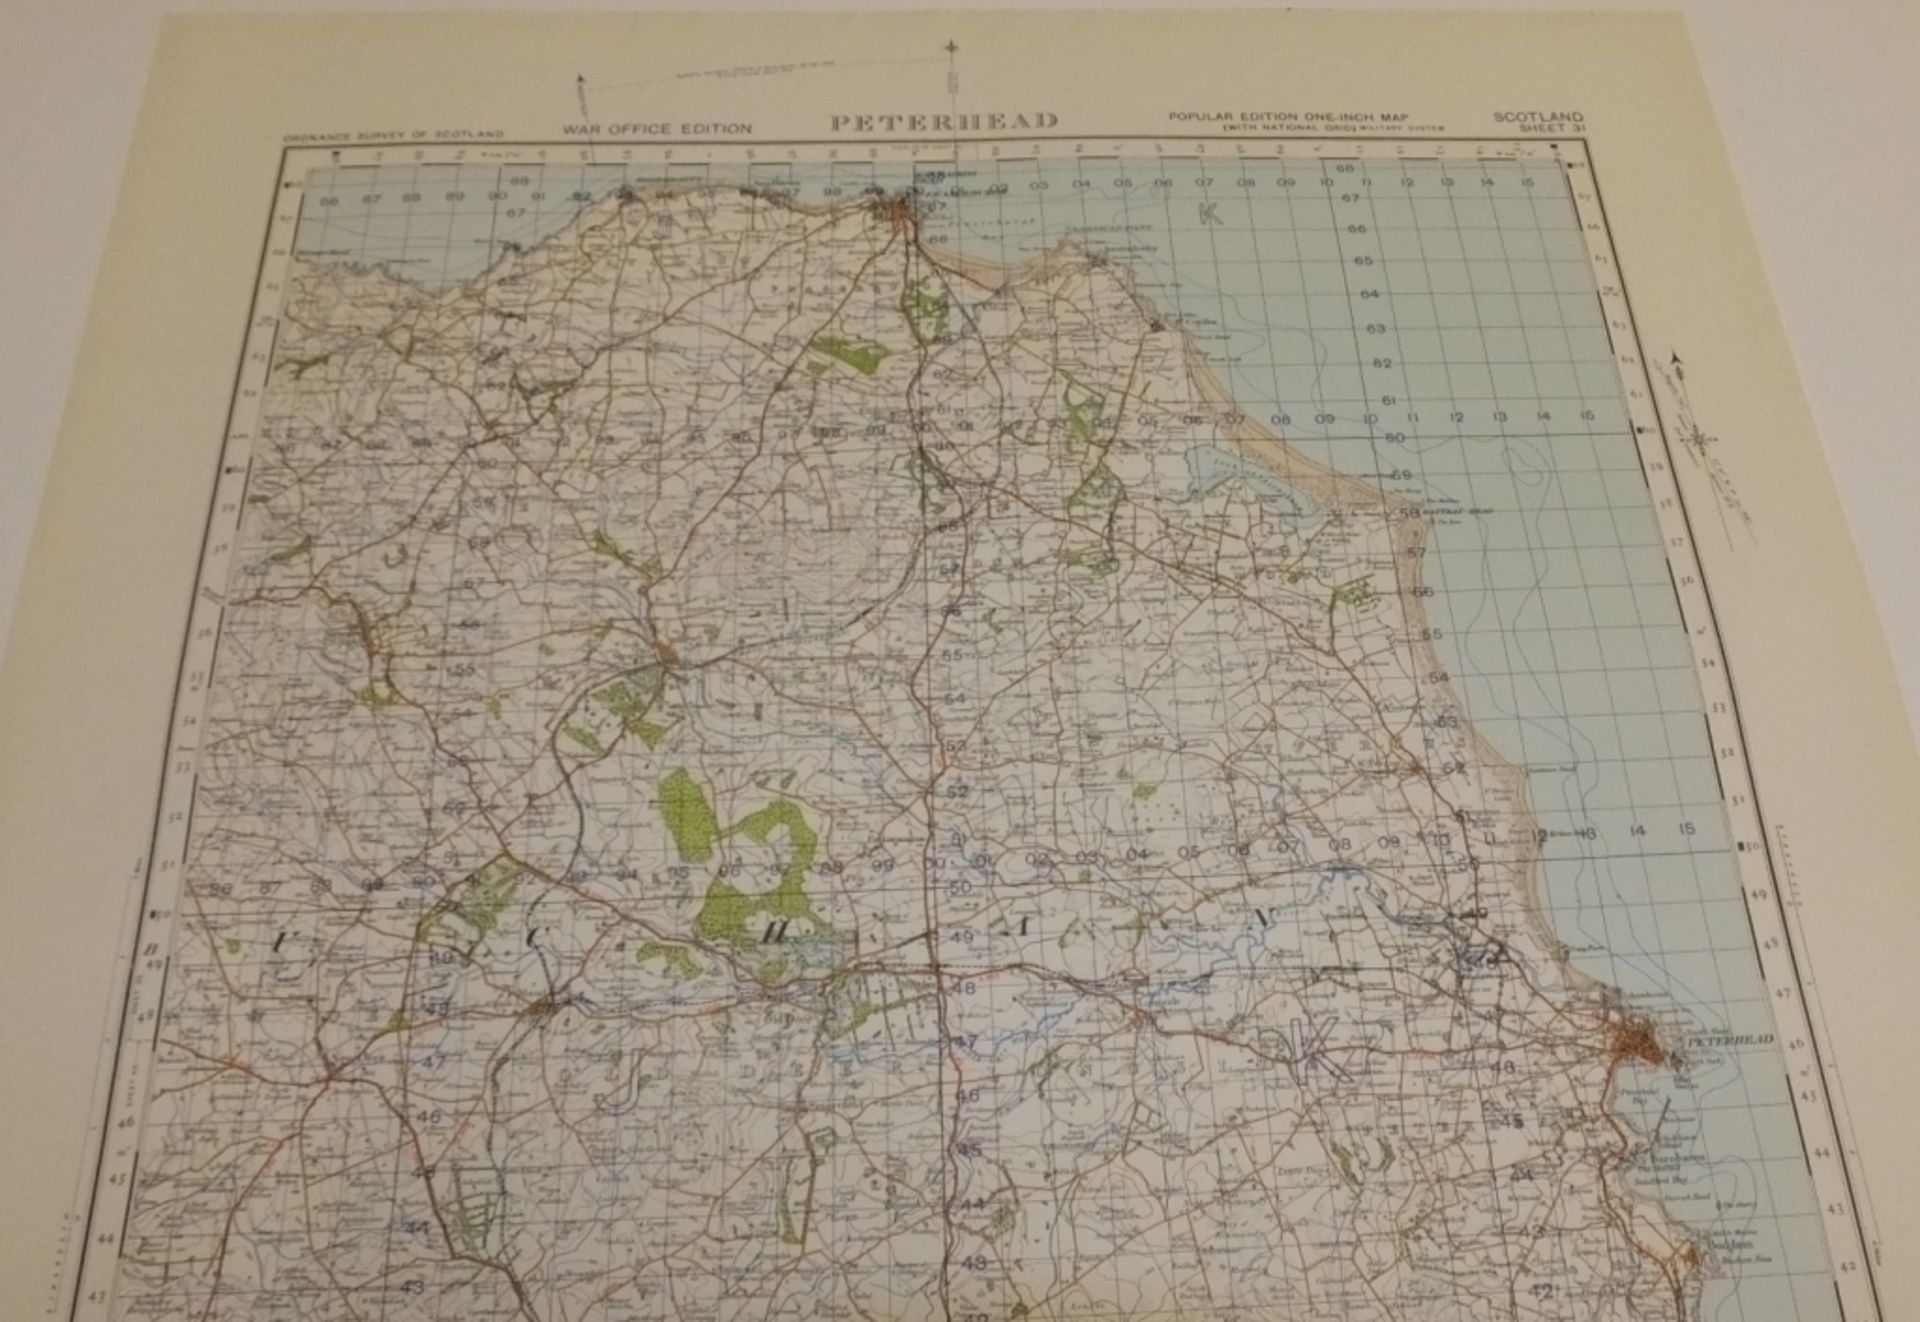 29x SCOTLAND MAP PETERHEAD 1INCH 1MILE 1949 POPULAR EDITION 4639GSGS SHEET 31 - Image 2 of 4